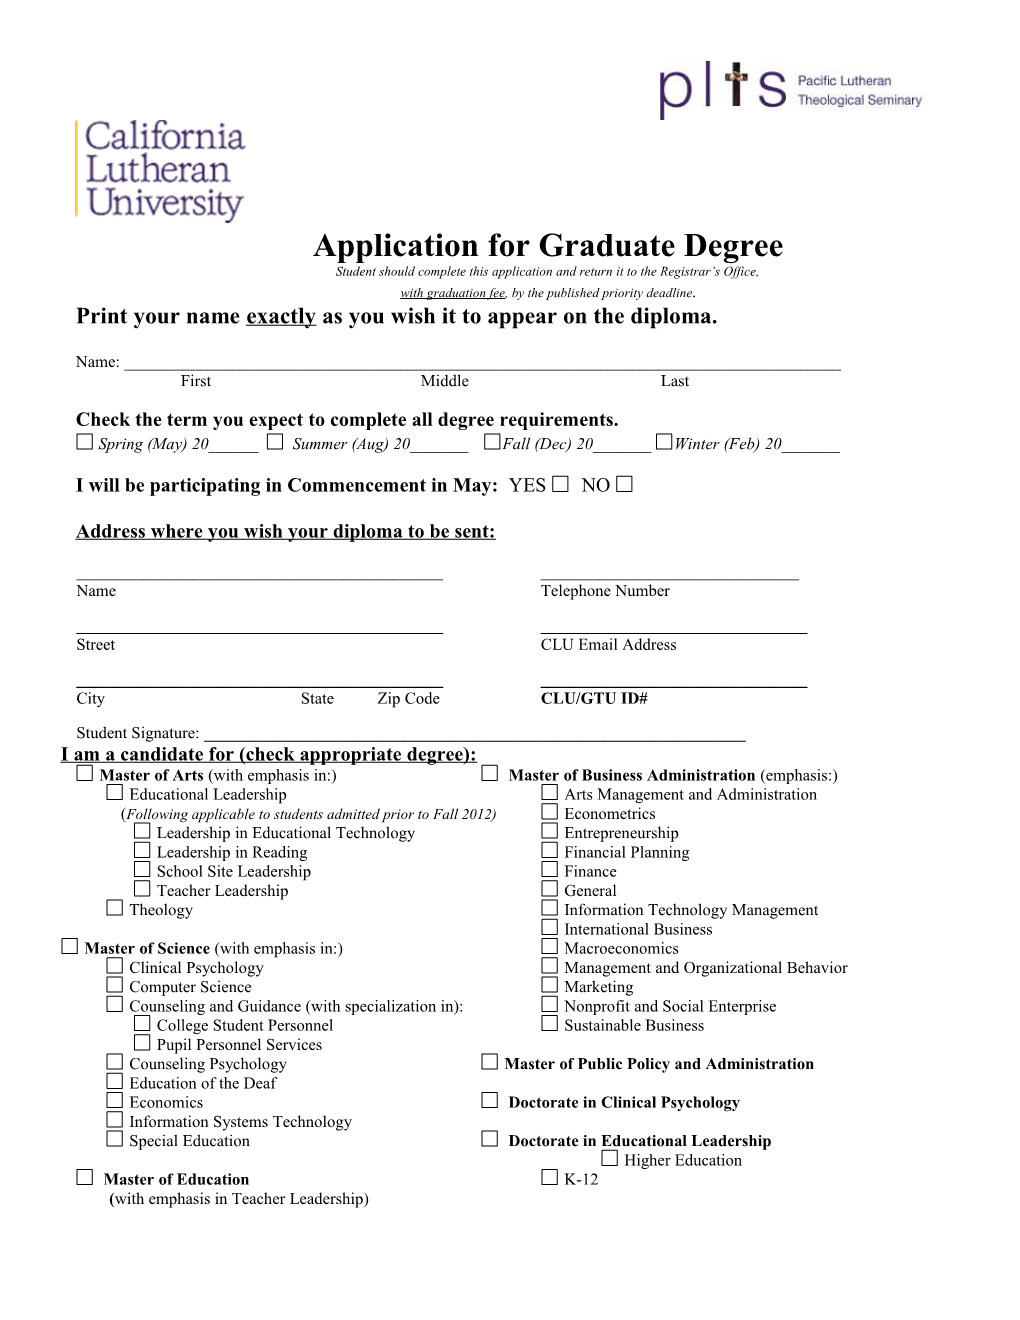 Application for Graduate Degree